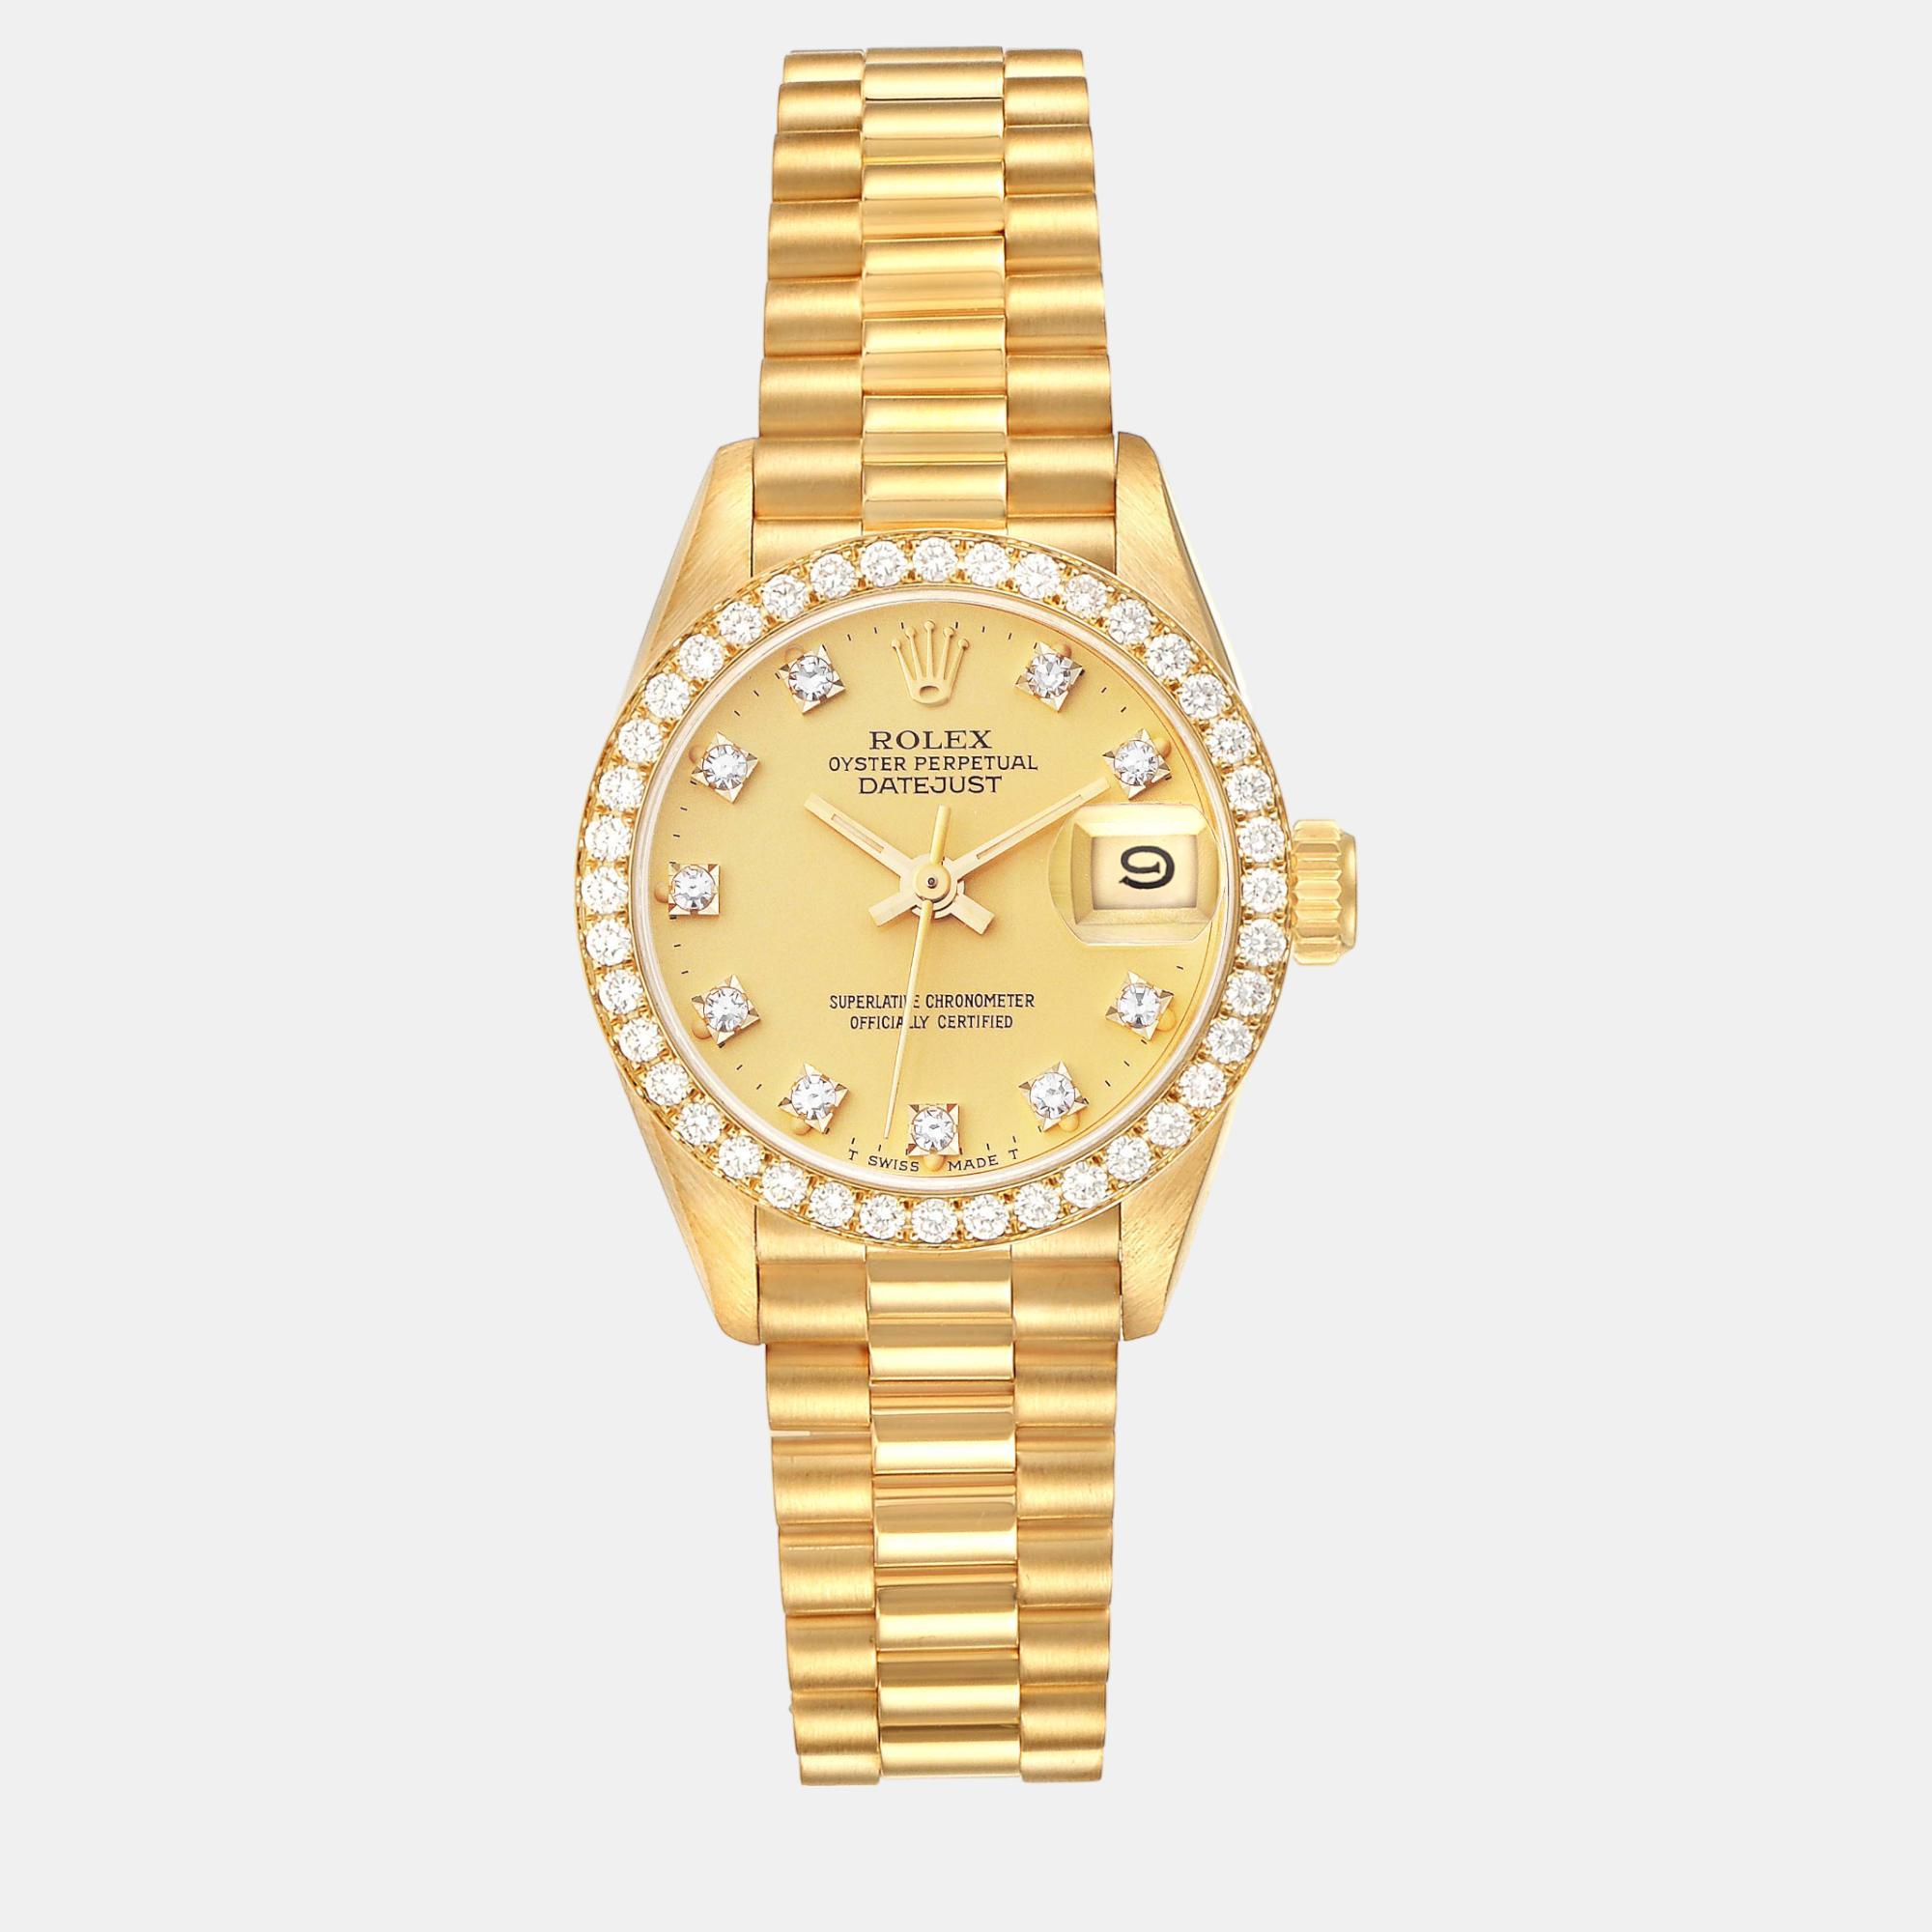 Rolex president datejust yellow gold diamond ladies watch 26.0 mm